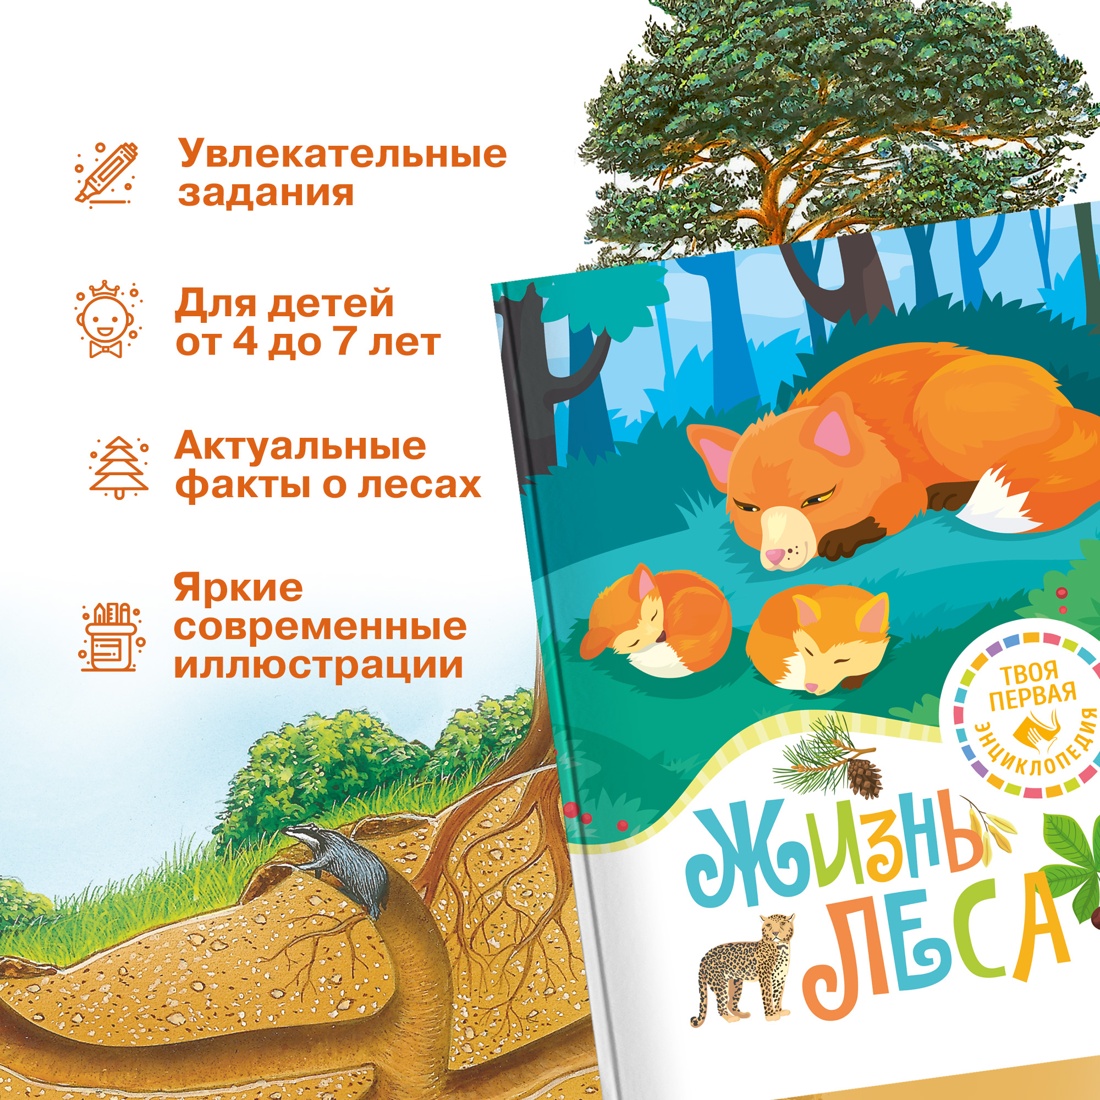 Промо материал к книге "Жизнь леса" №1